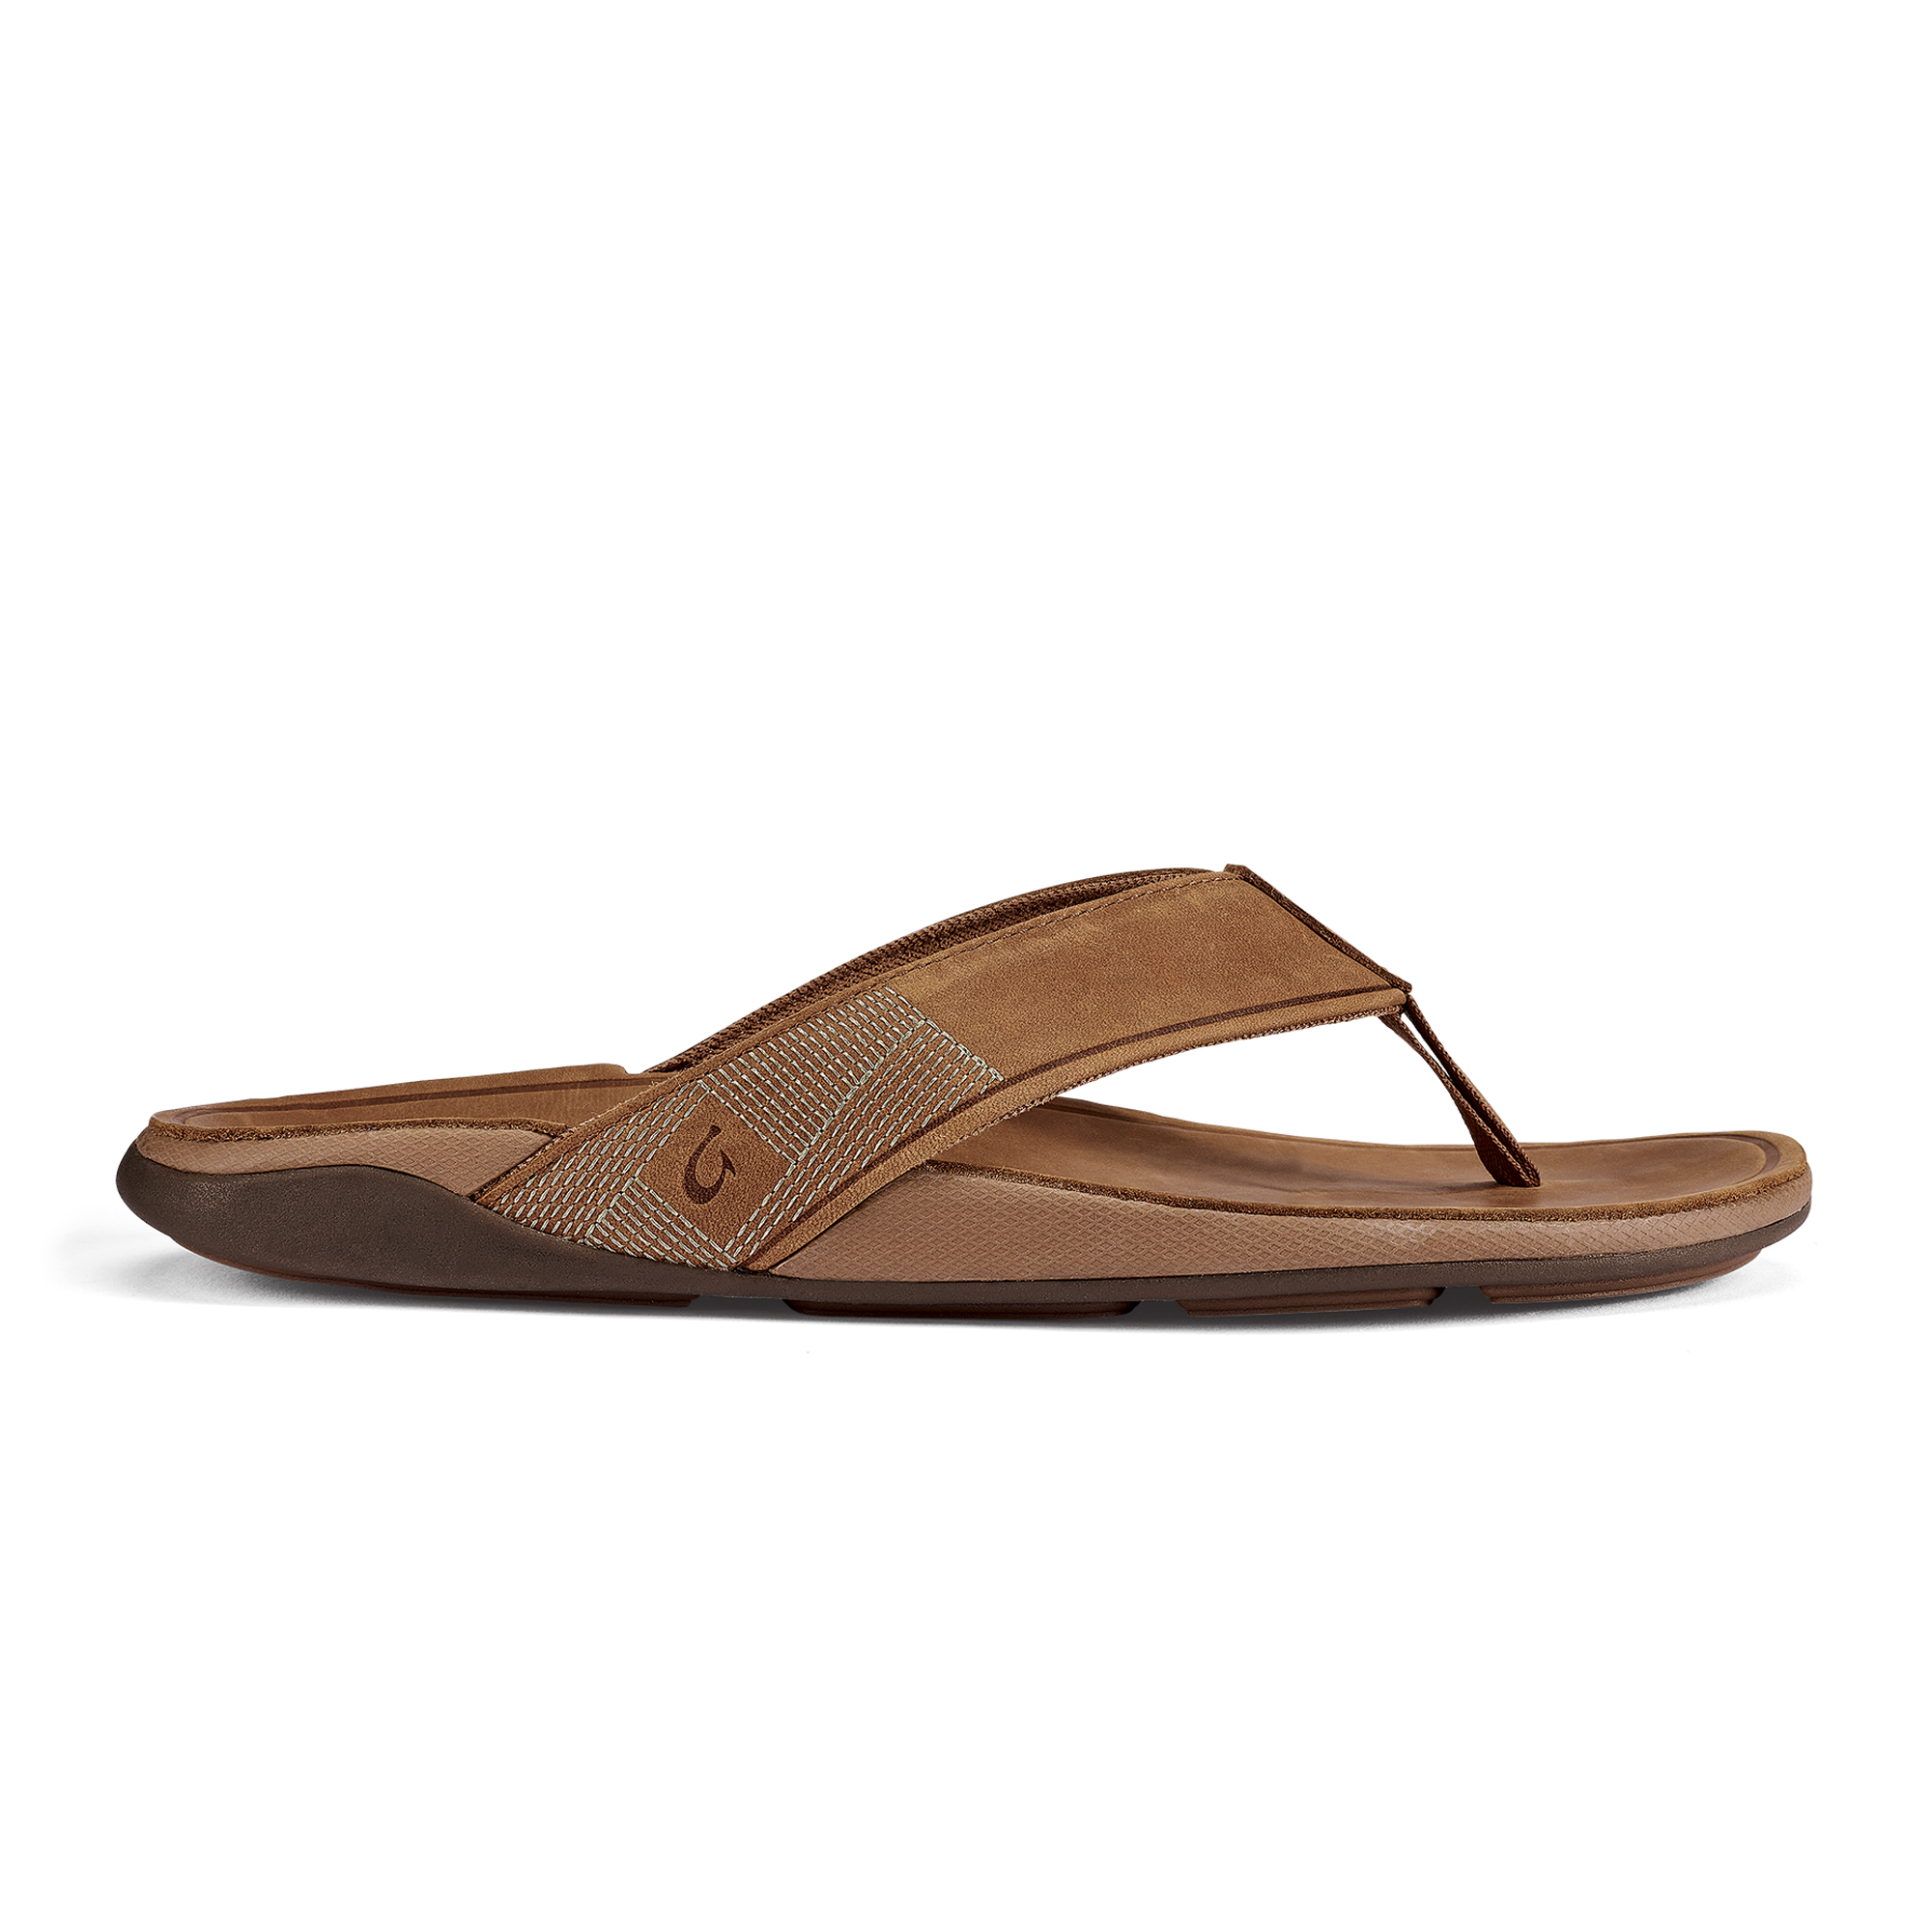 Tuahine Men's Waterproof Leather Beach Sandals - Toffee | OluKai